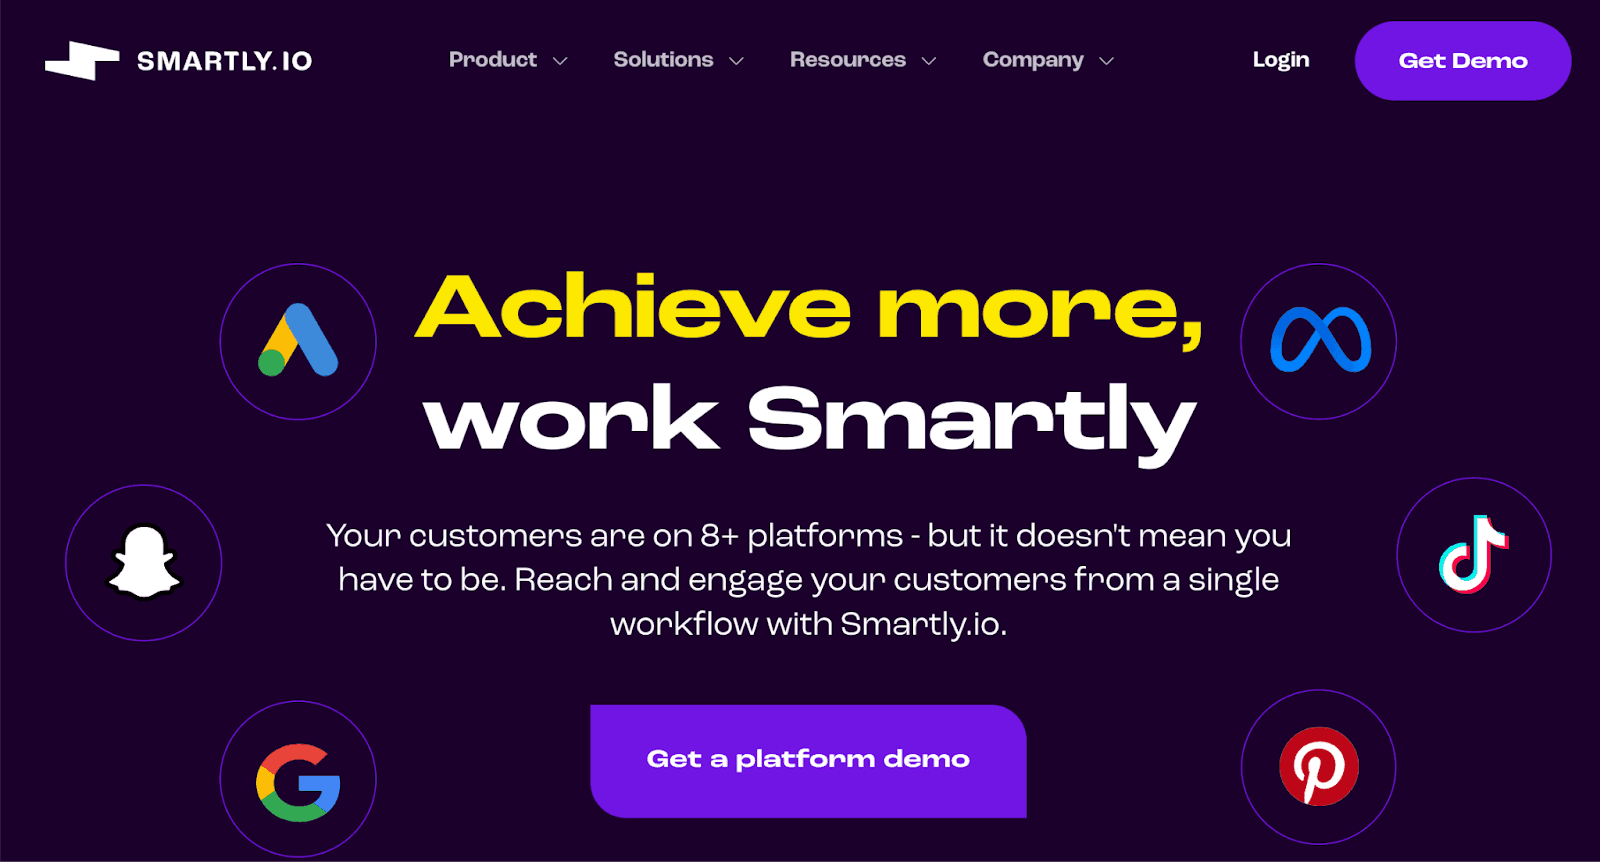 Smartly.io webpage - Achieve more, work Smartly